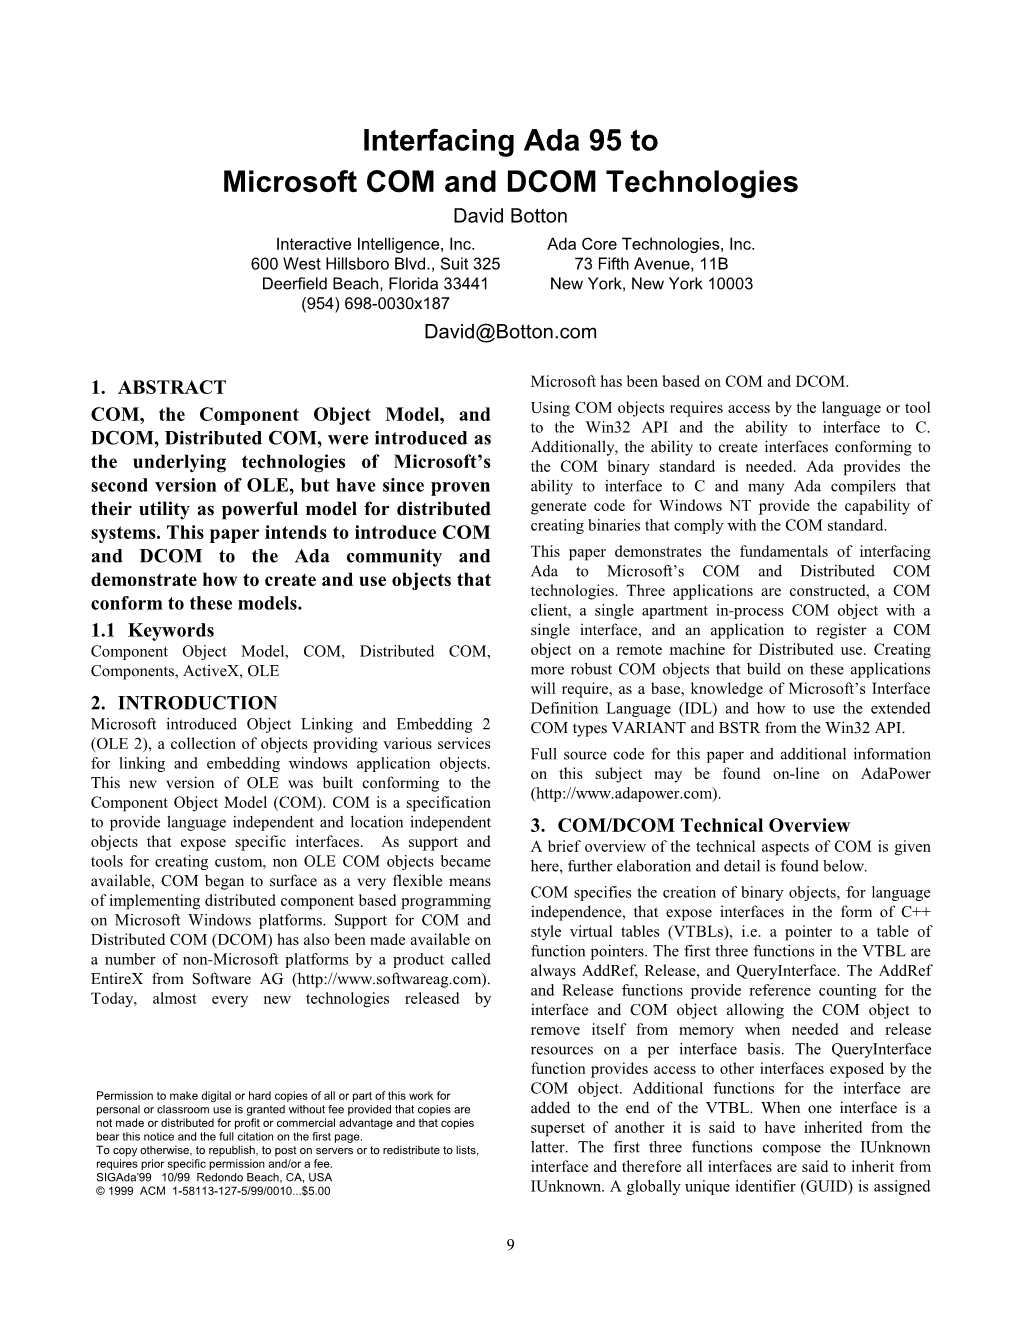 Interfacing Ada 95 to Microsoft COM and DCOM Technologies David Botton Interactive Intelligence, Inc